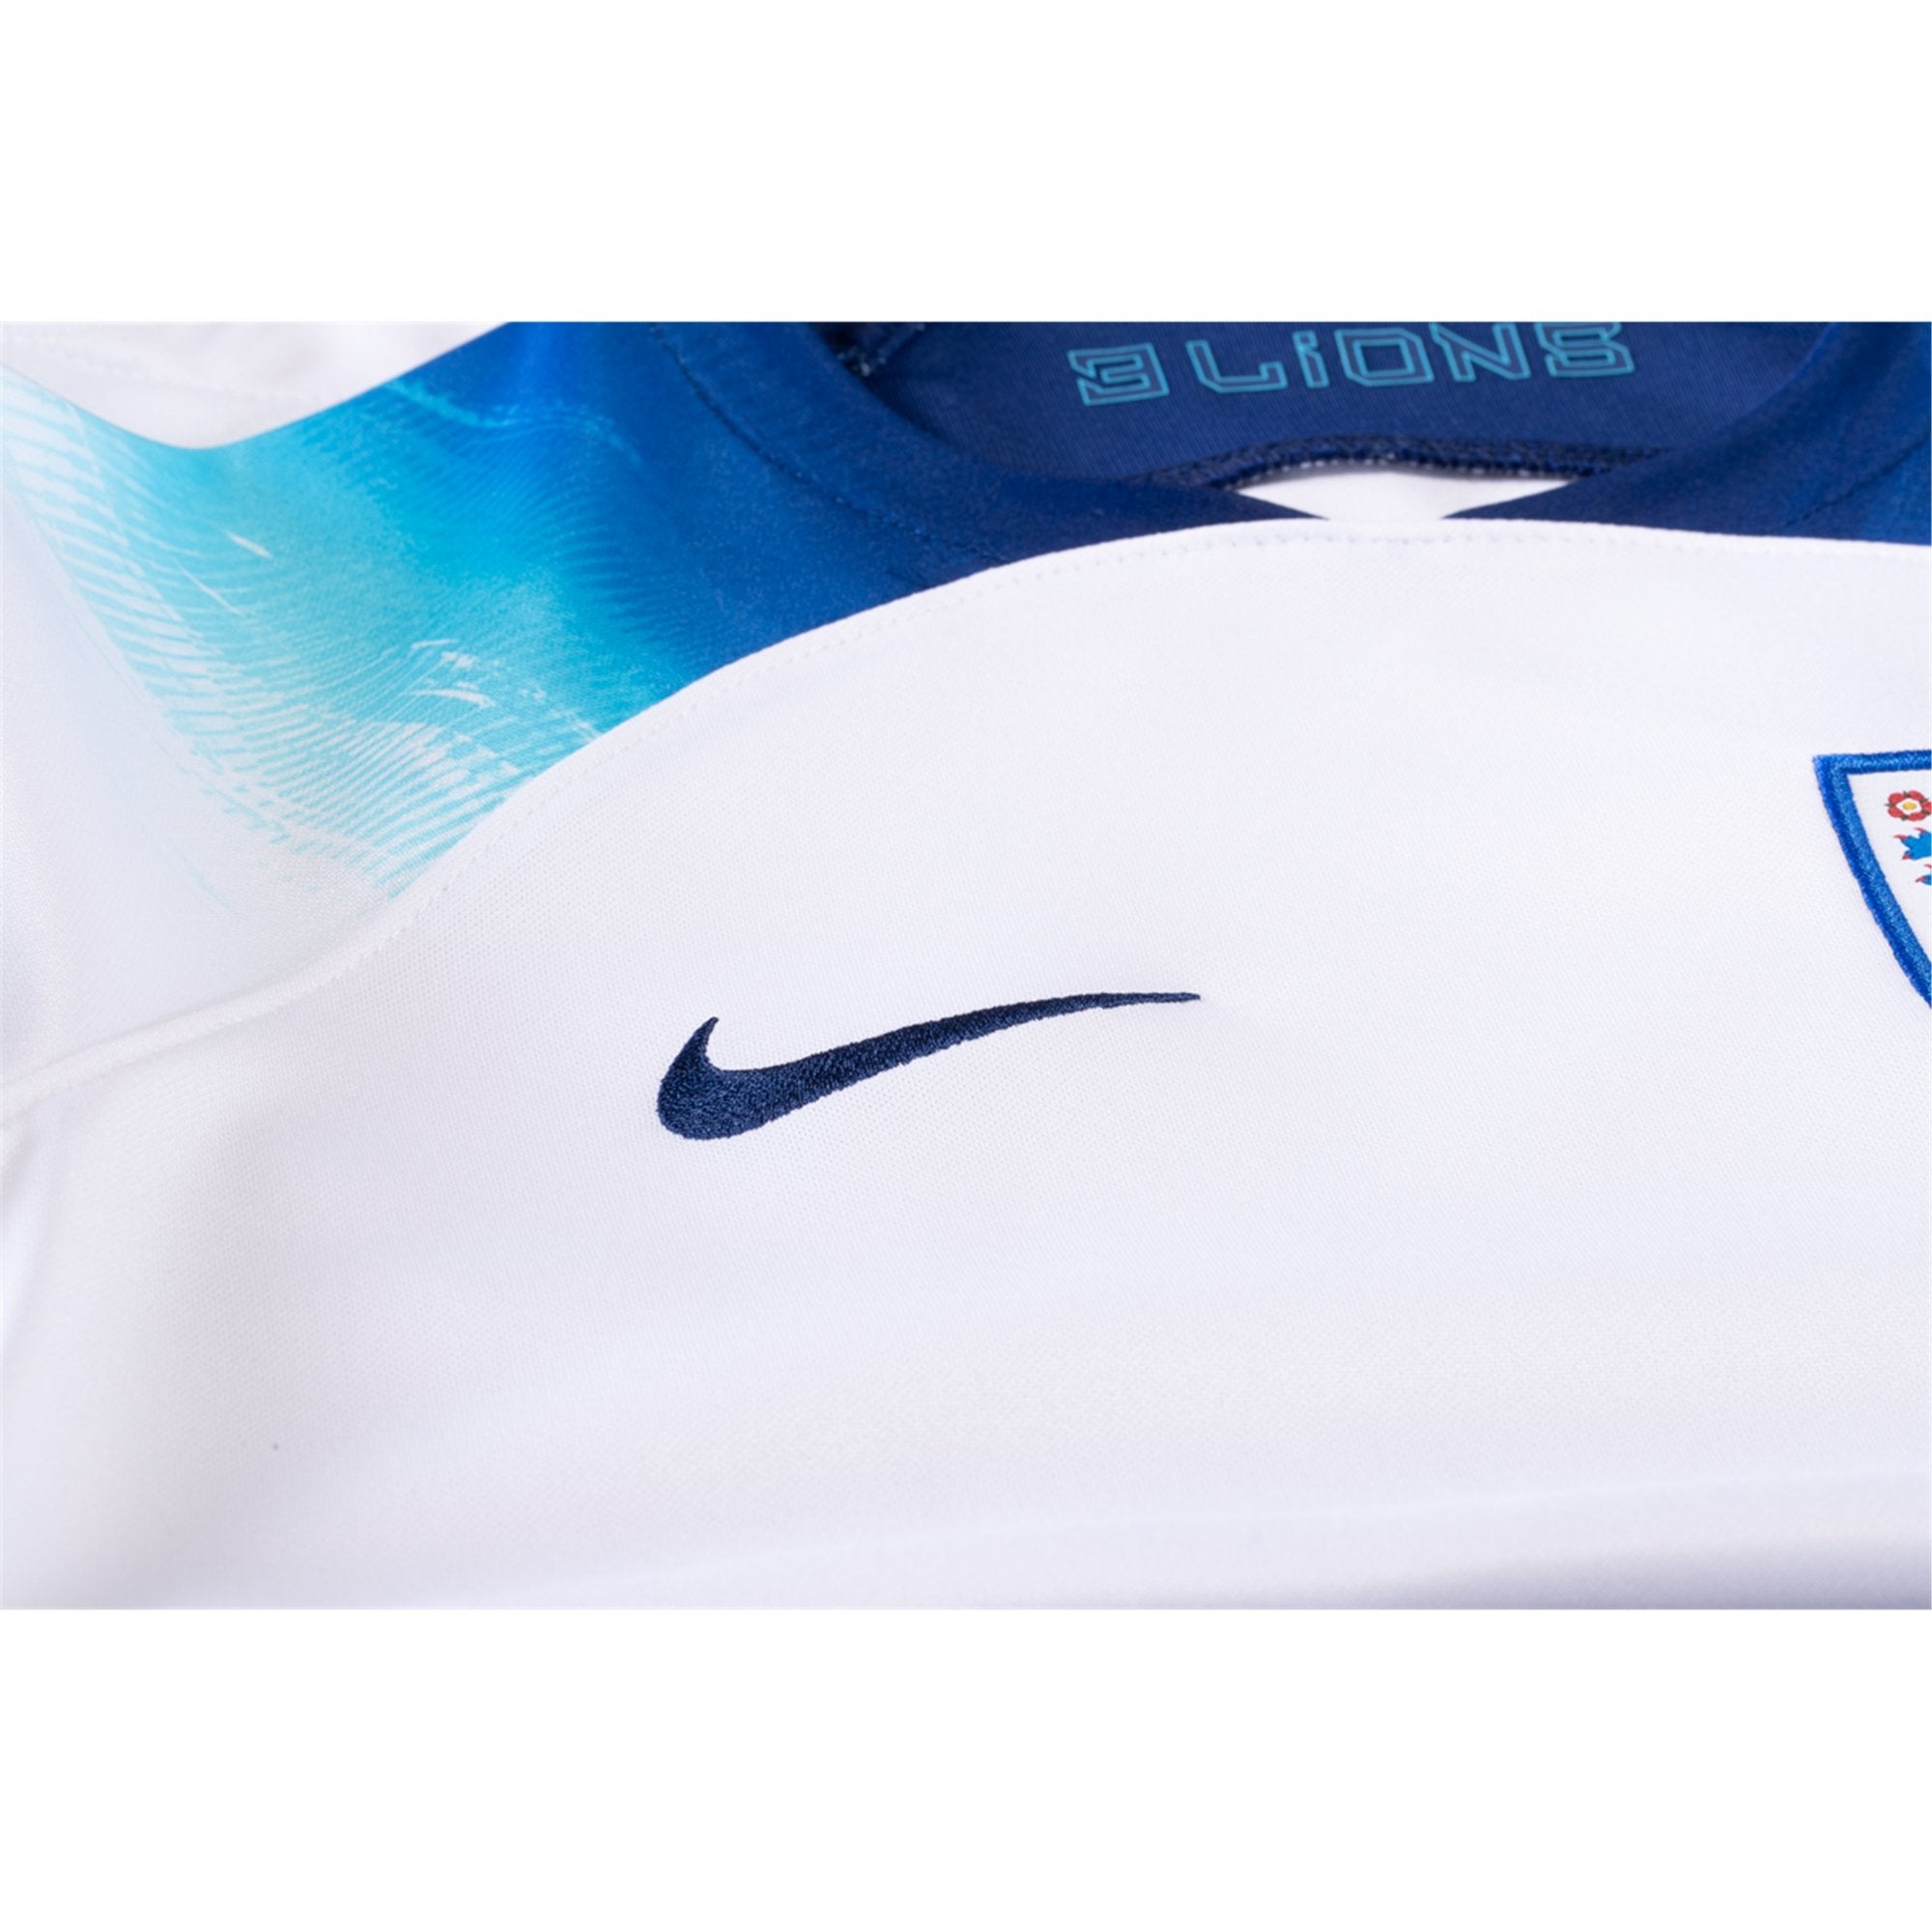 Kid's Replica Nike England Away Jersey 2022 DN0829-600 – Soccer Zone USA